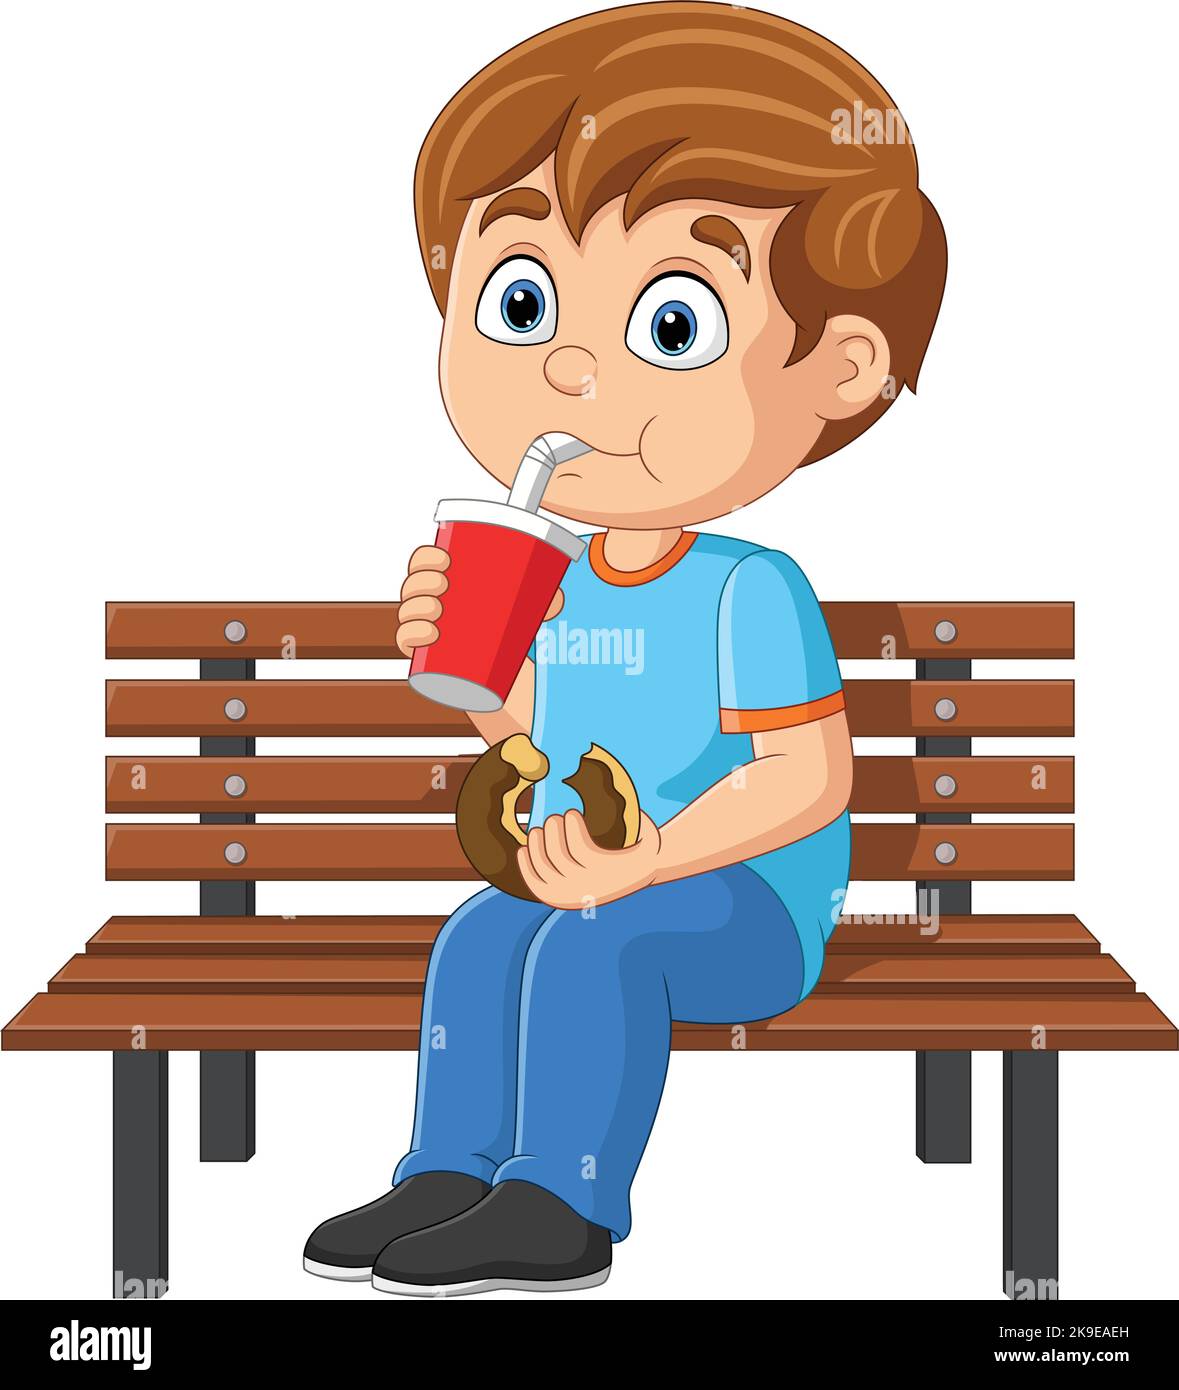 Cartoon little boy eat donut and drink soda on bench Stock Vector